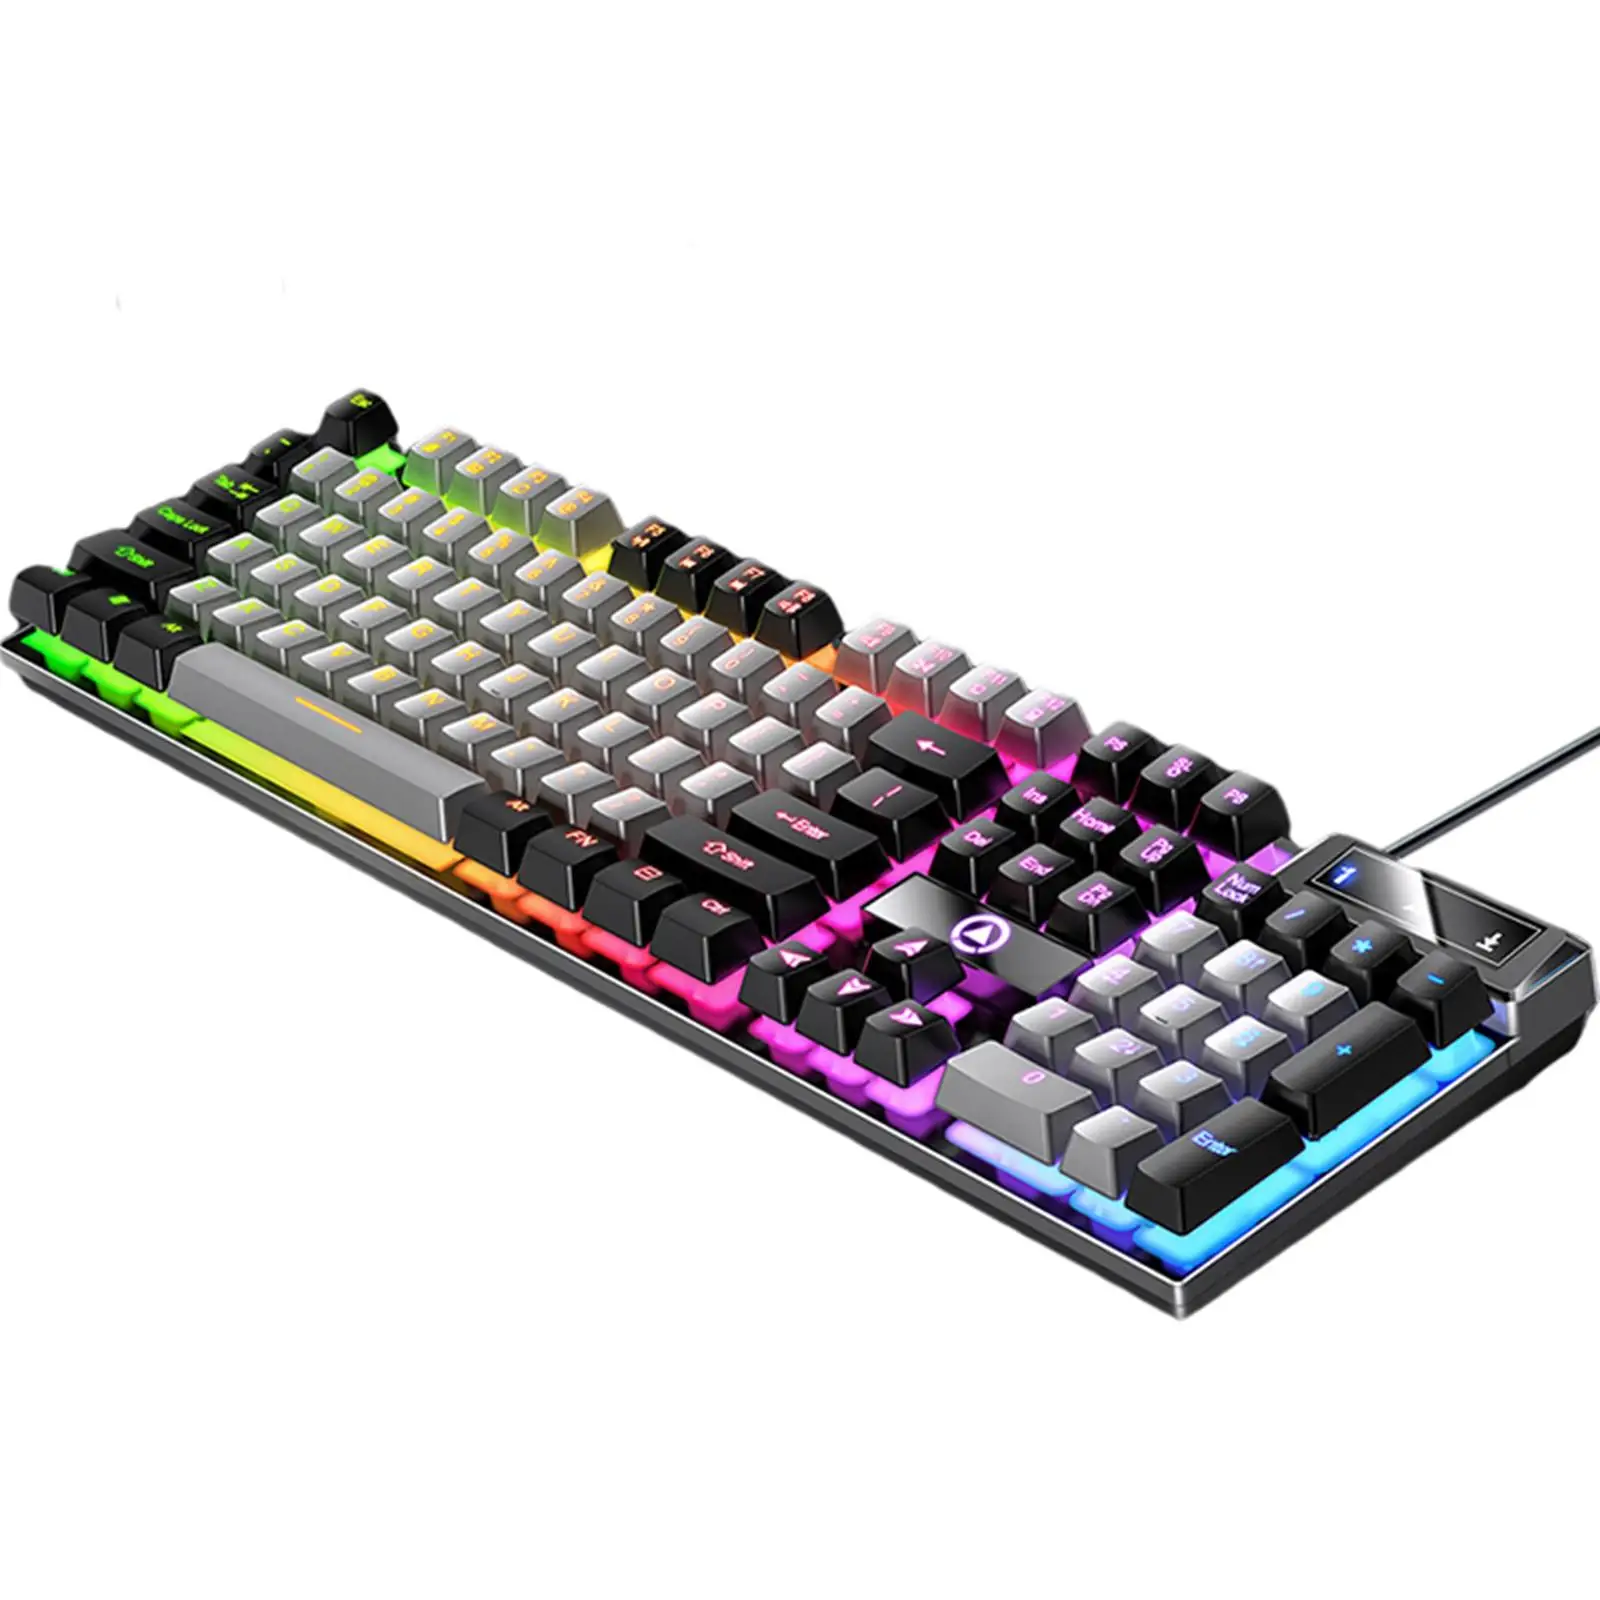 Mechanical Gaming Keyboard RGB Backlit USB Comfortable Multimedia Controls for Desktop